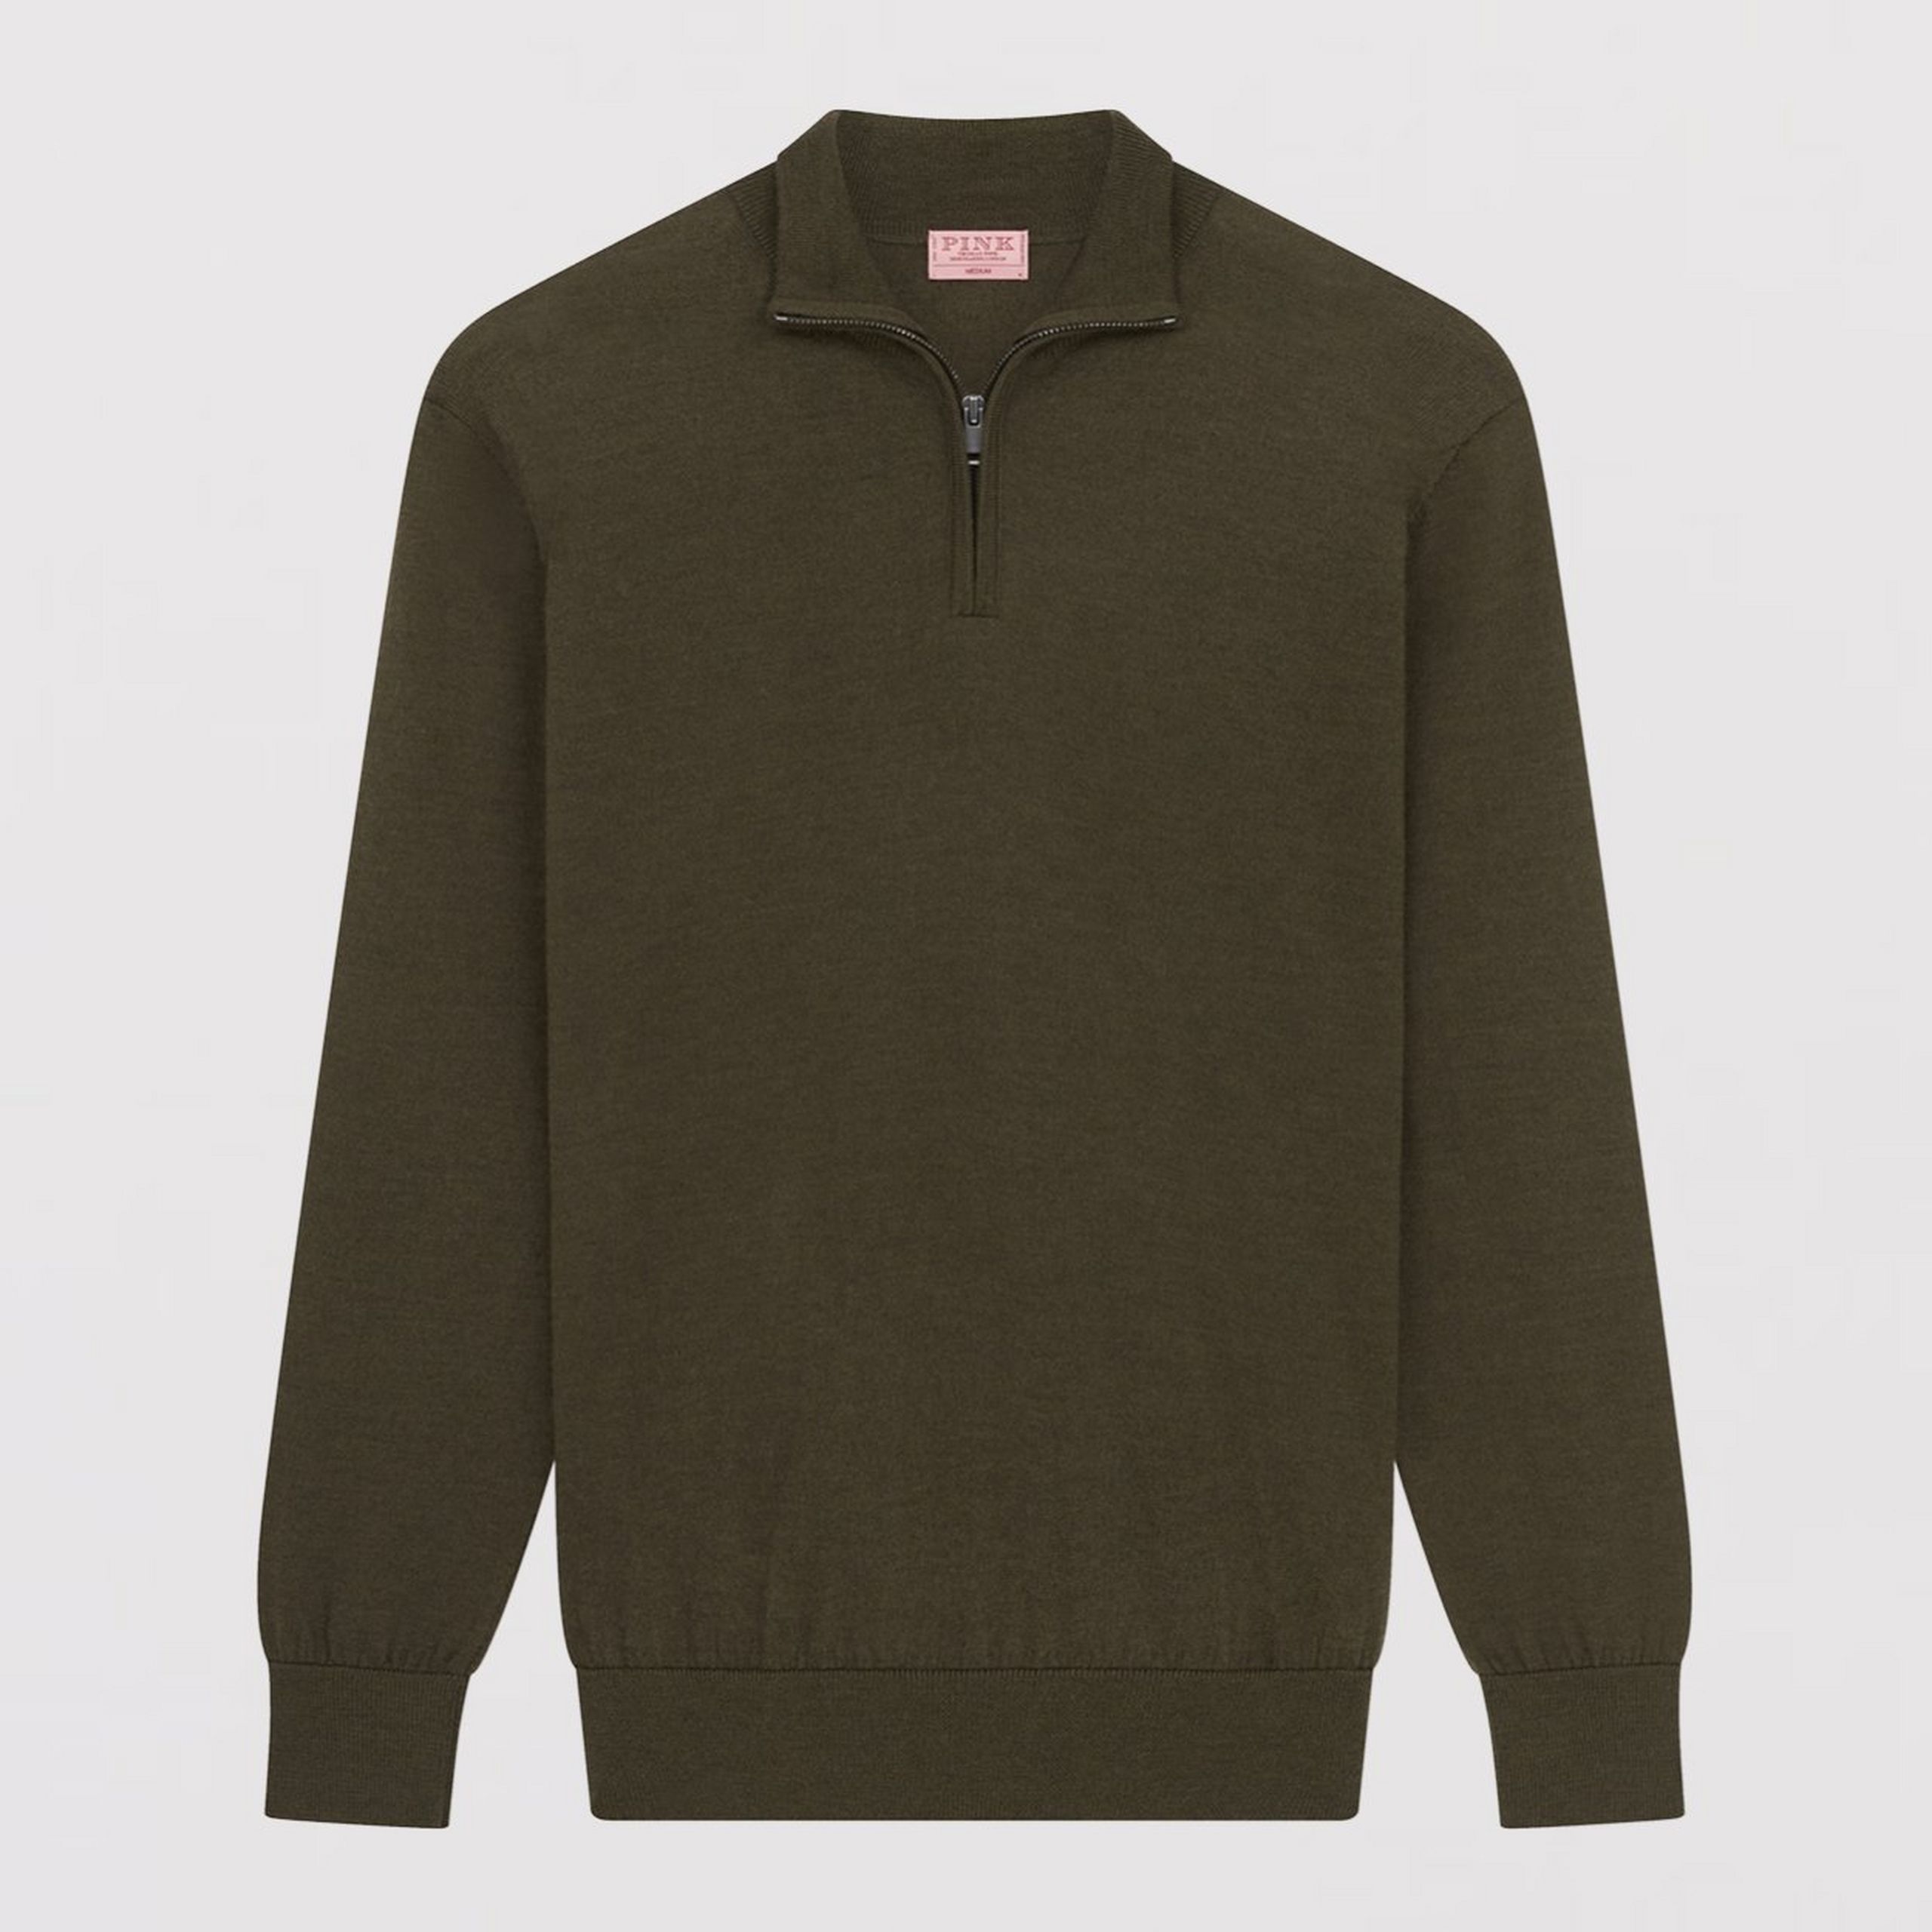 Olive Green Merino Wool Zip Neck Sweater